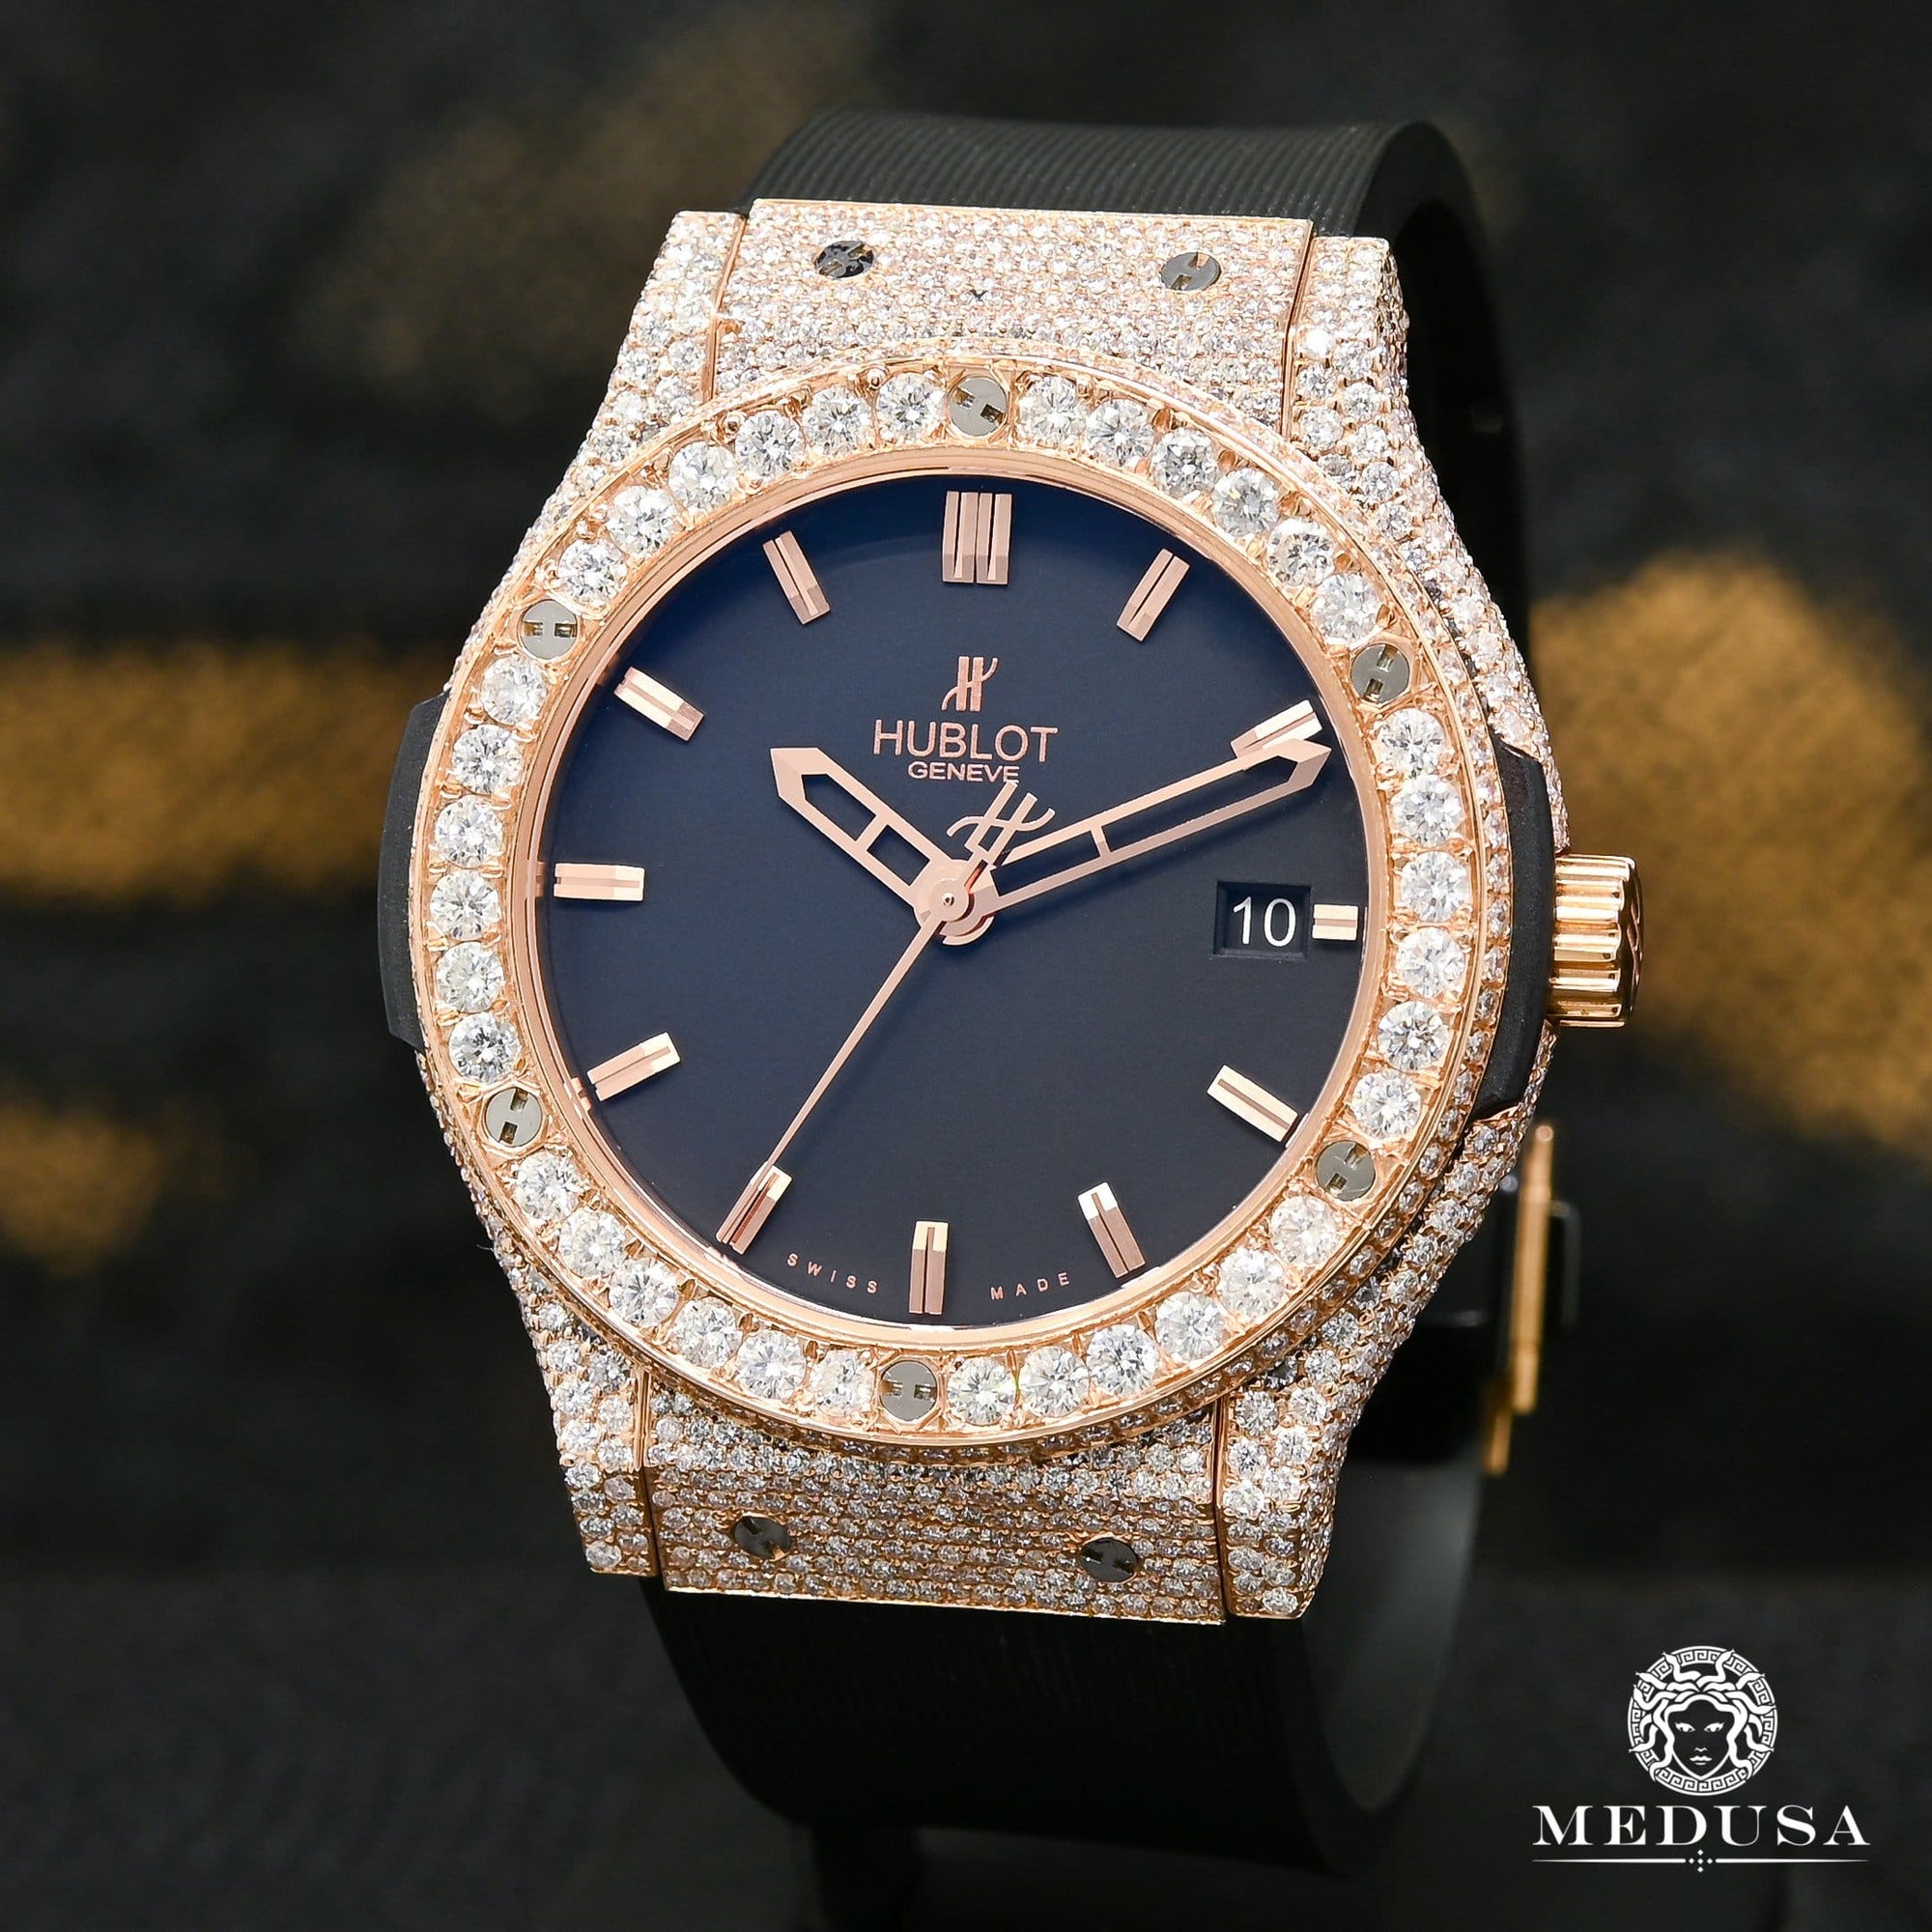 Hublot watch | Hublot Classic Fusion Men's Watch 45mm - Iced Everose Rose Gold